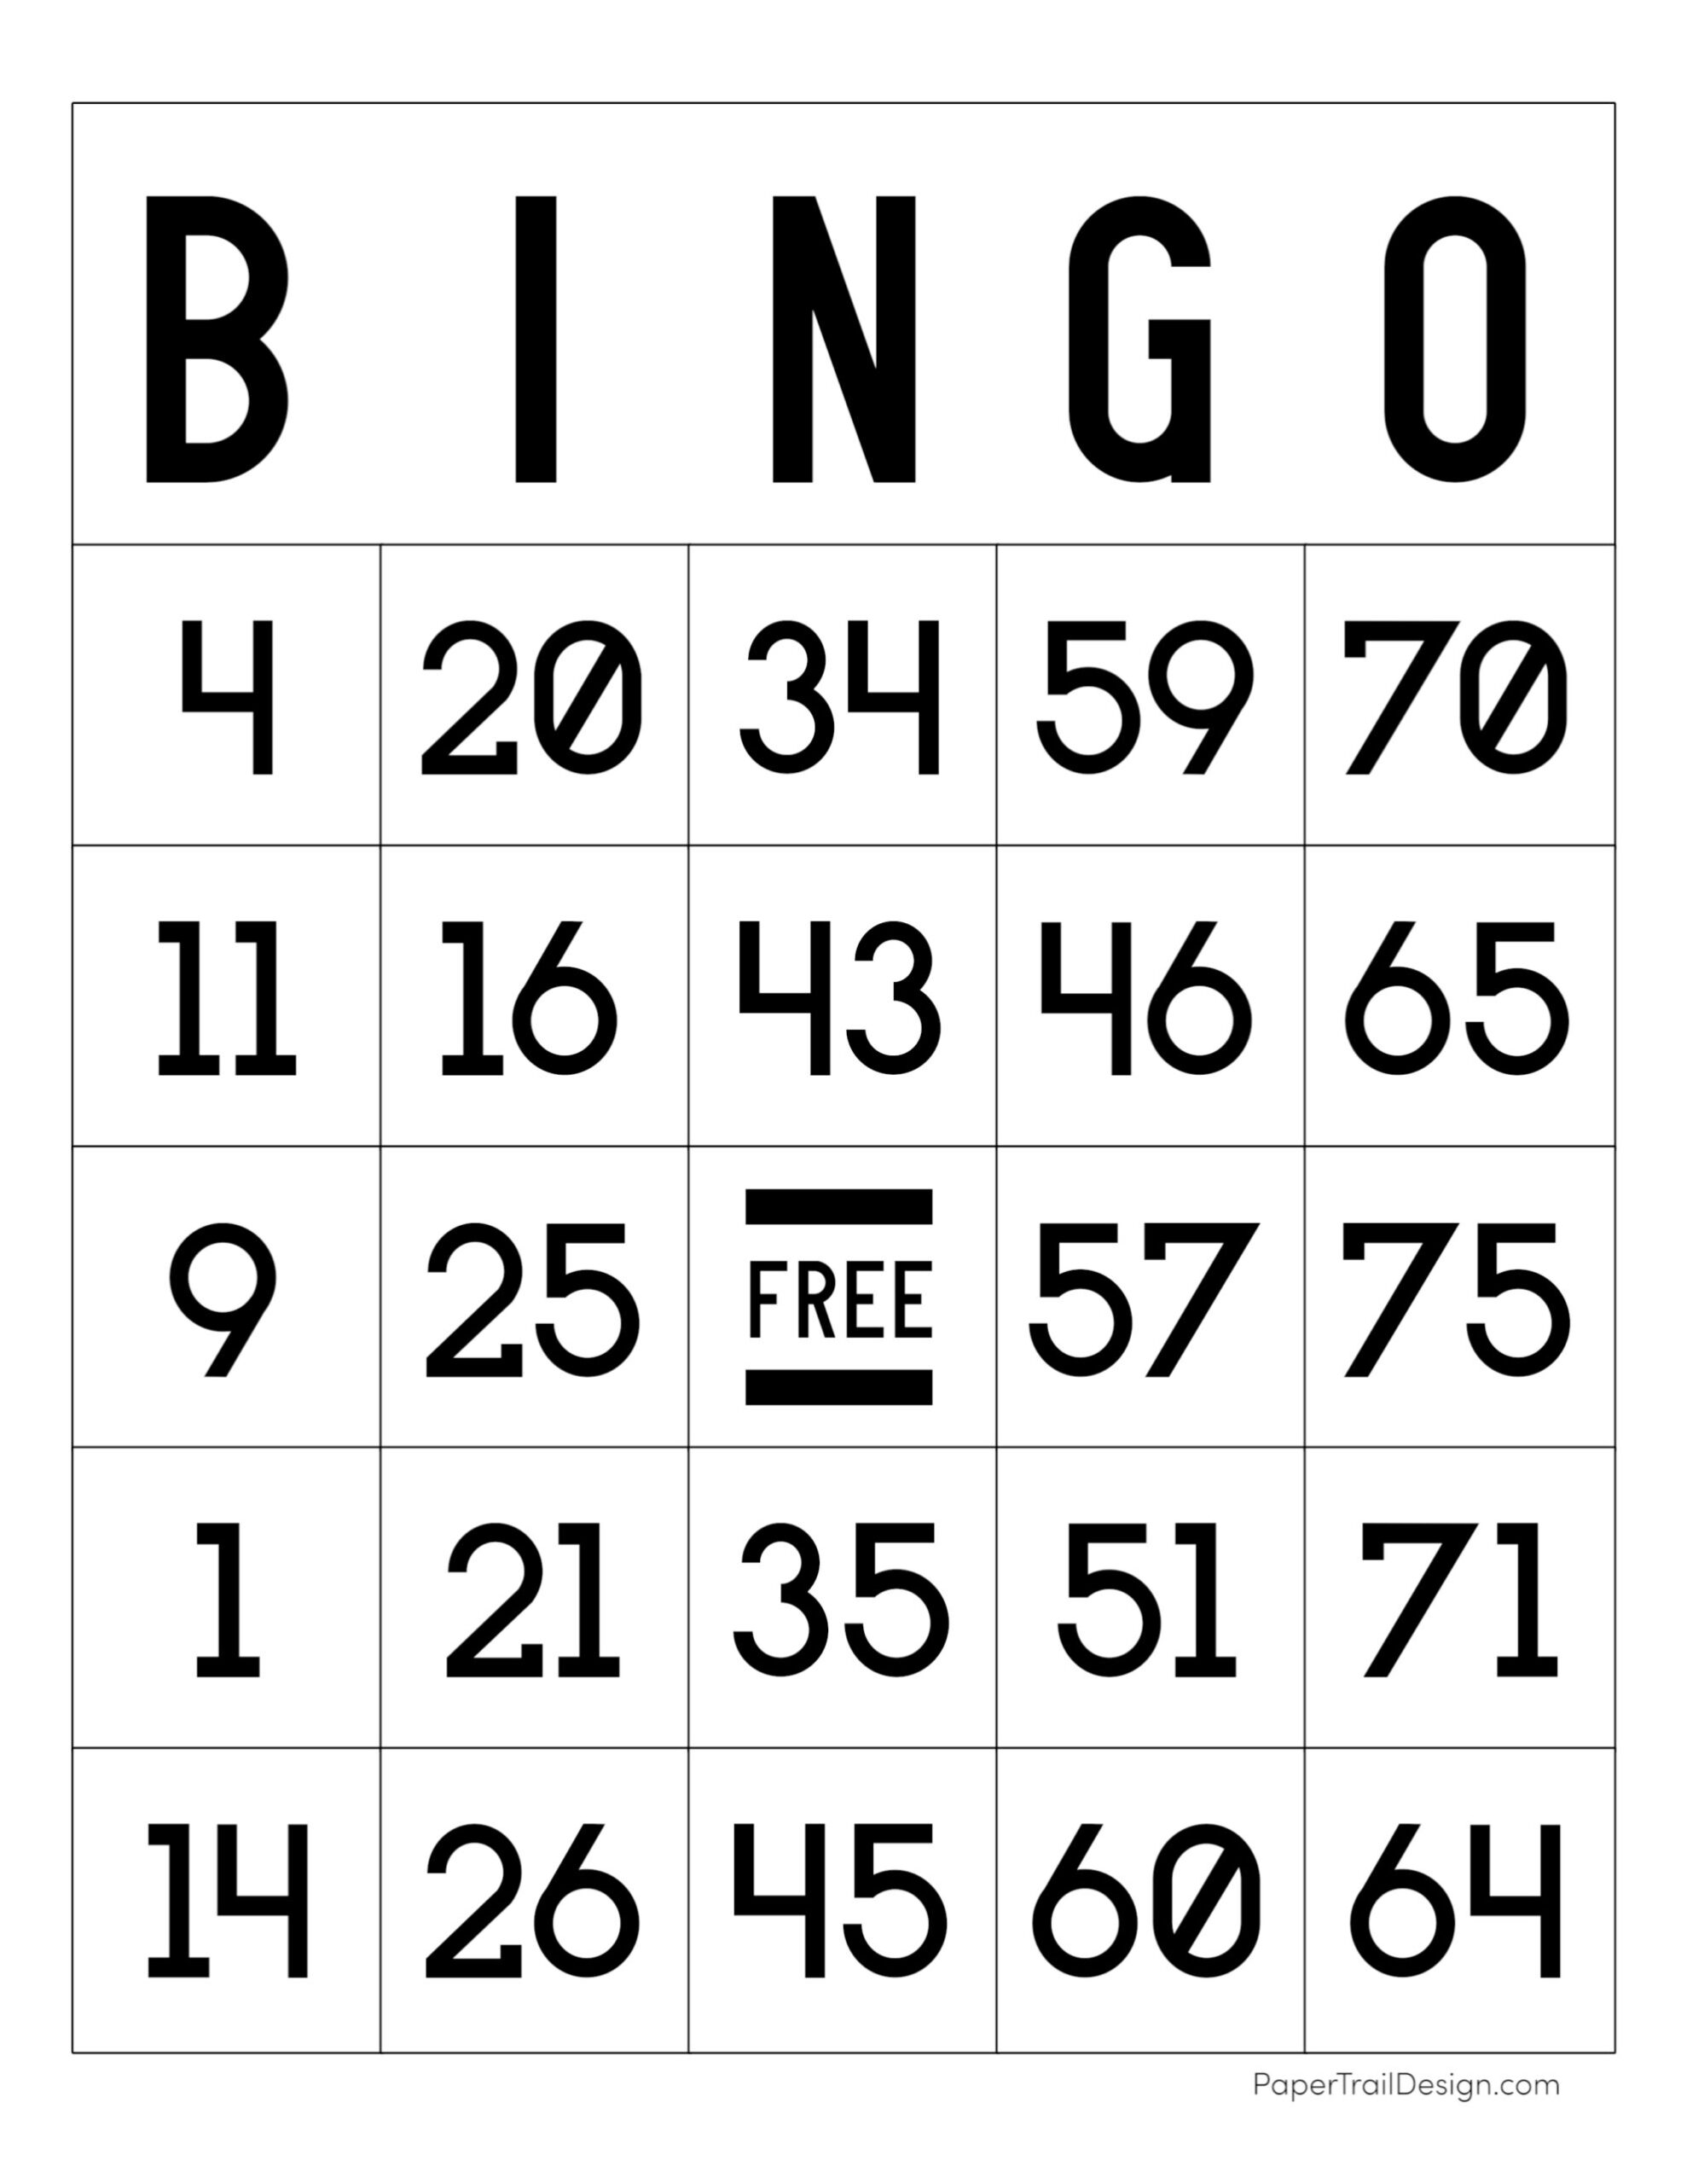 Free Printable Bingo Cards - Paper Trail Design - Free Printable Bingo Cards 1-75